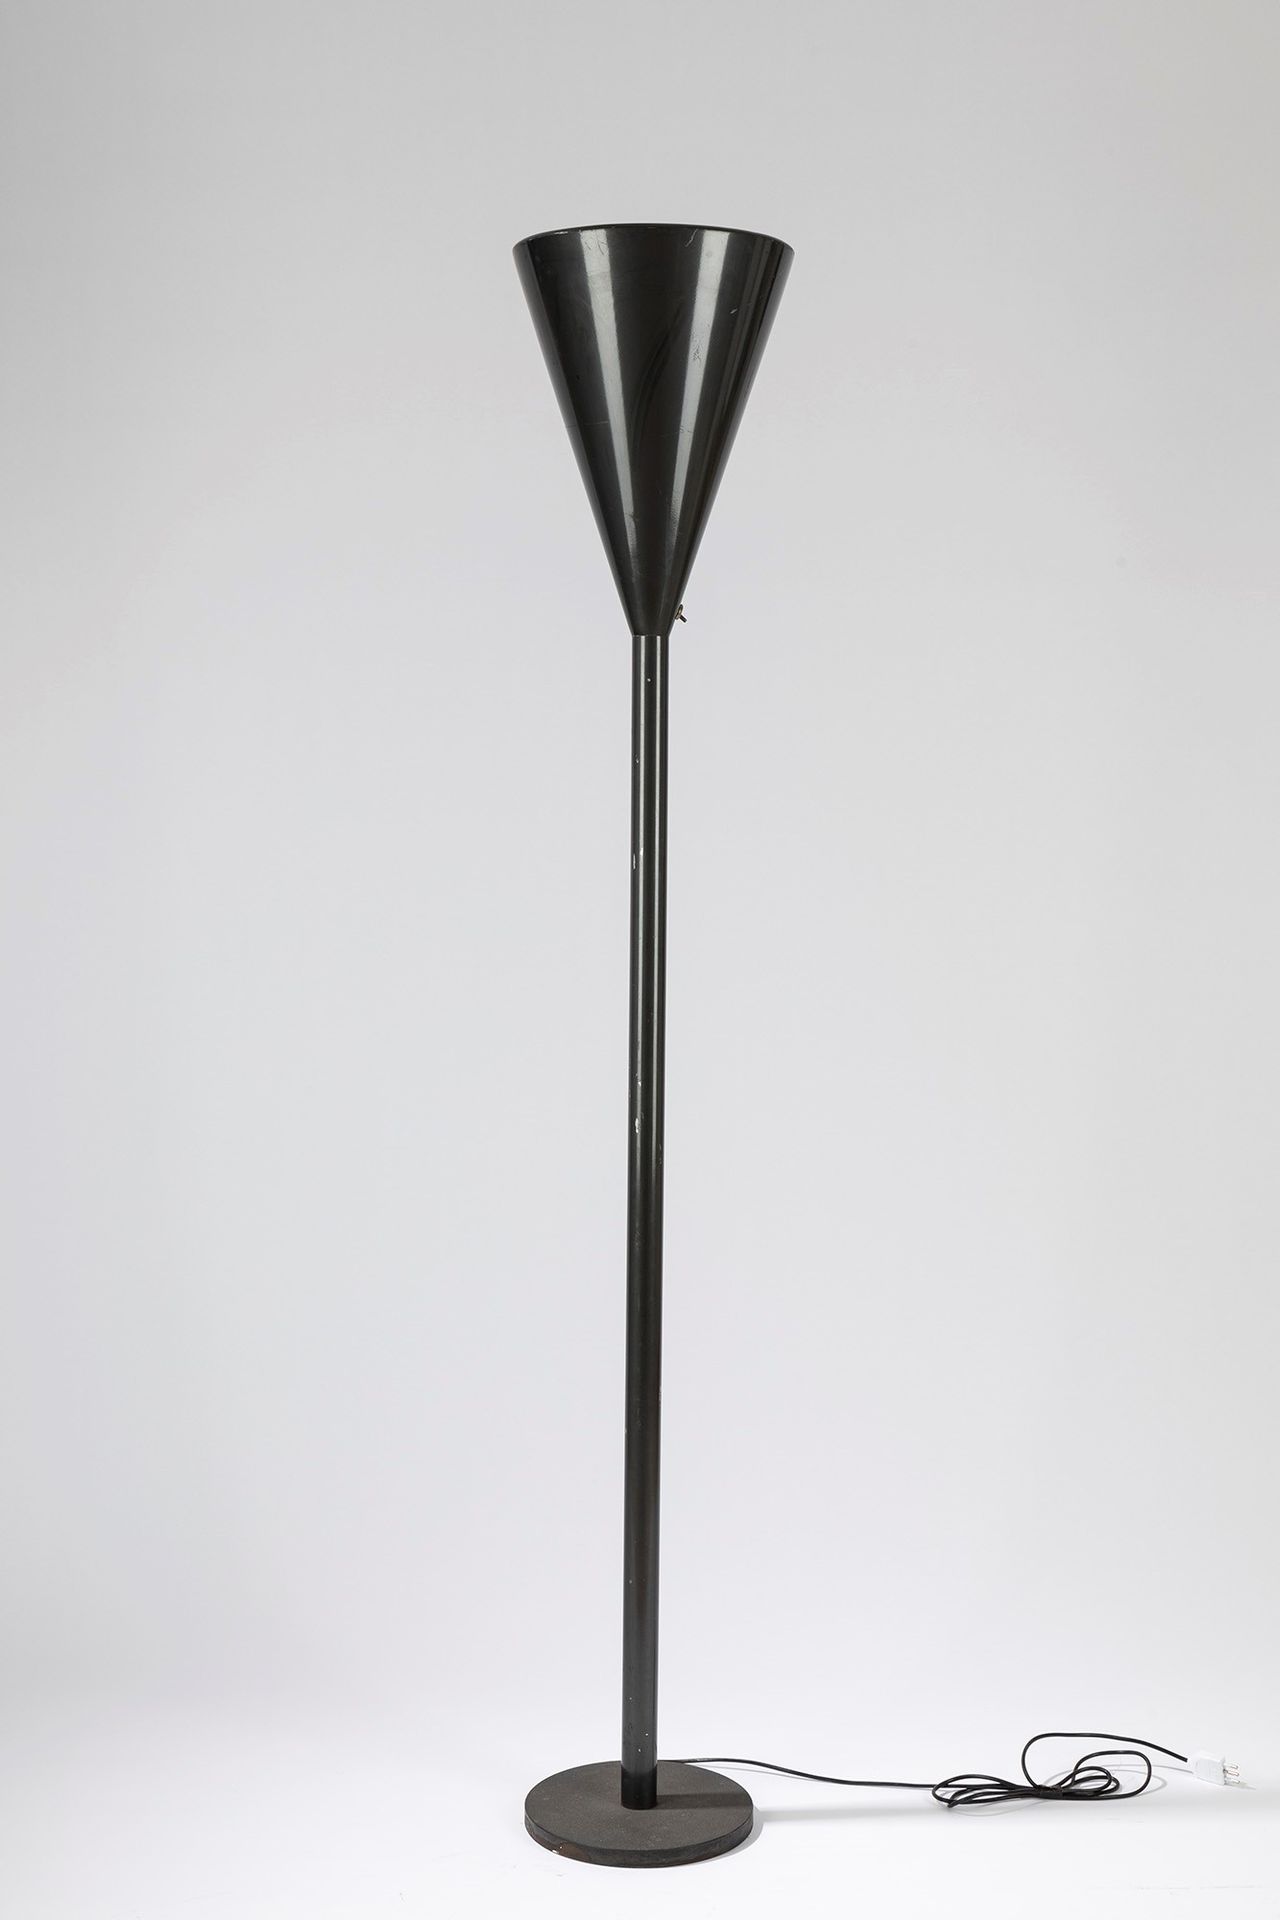 STILNOVO 落地灯，50年代

dm cm 30, H cm 171
Luminator落地灯，来自意大利Stilnovo。

炭灰色的舔食金属。